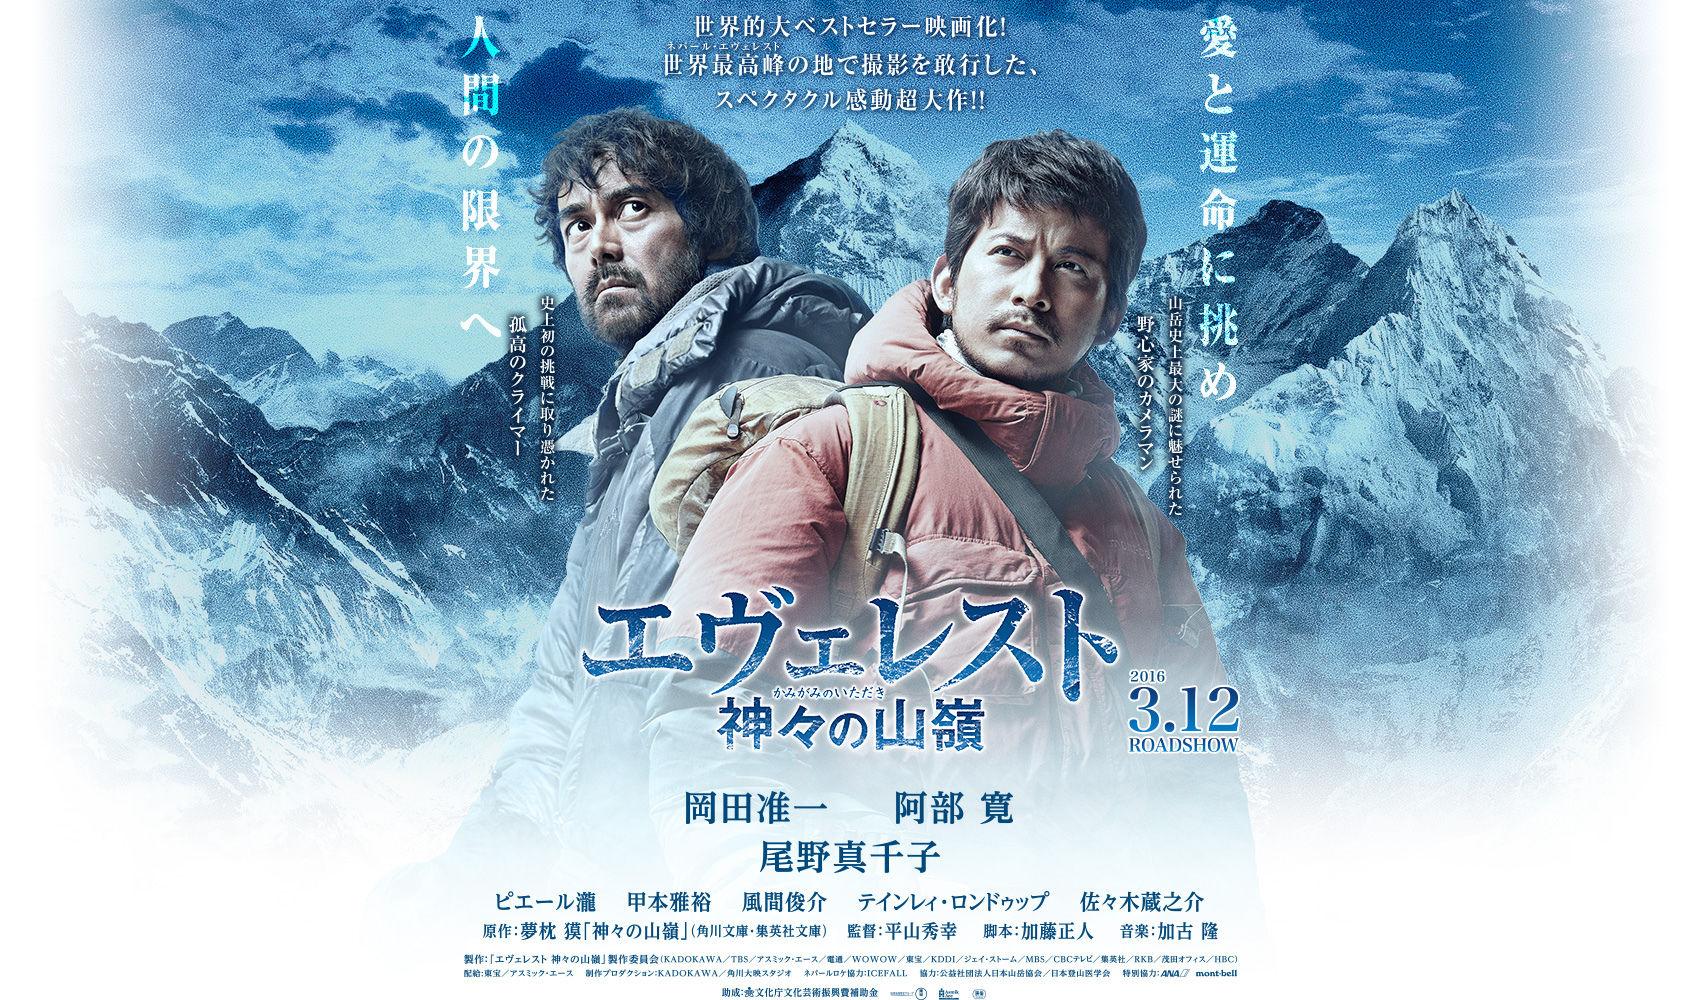 مشاهدة فيلم Everest: The Summit Of The Gods 2016 مترجم HD اون لاين